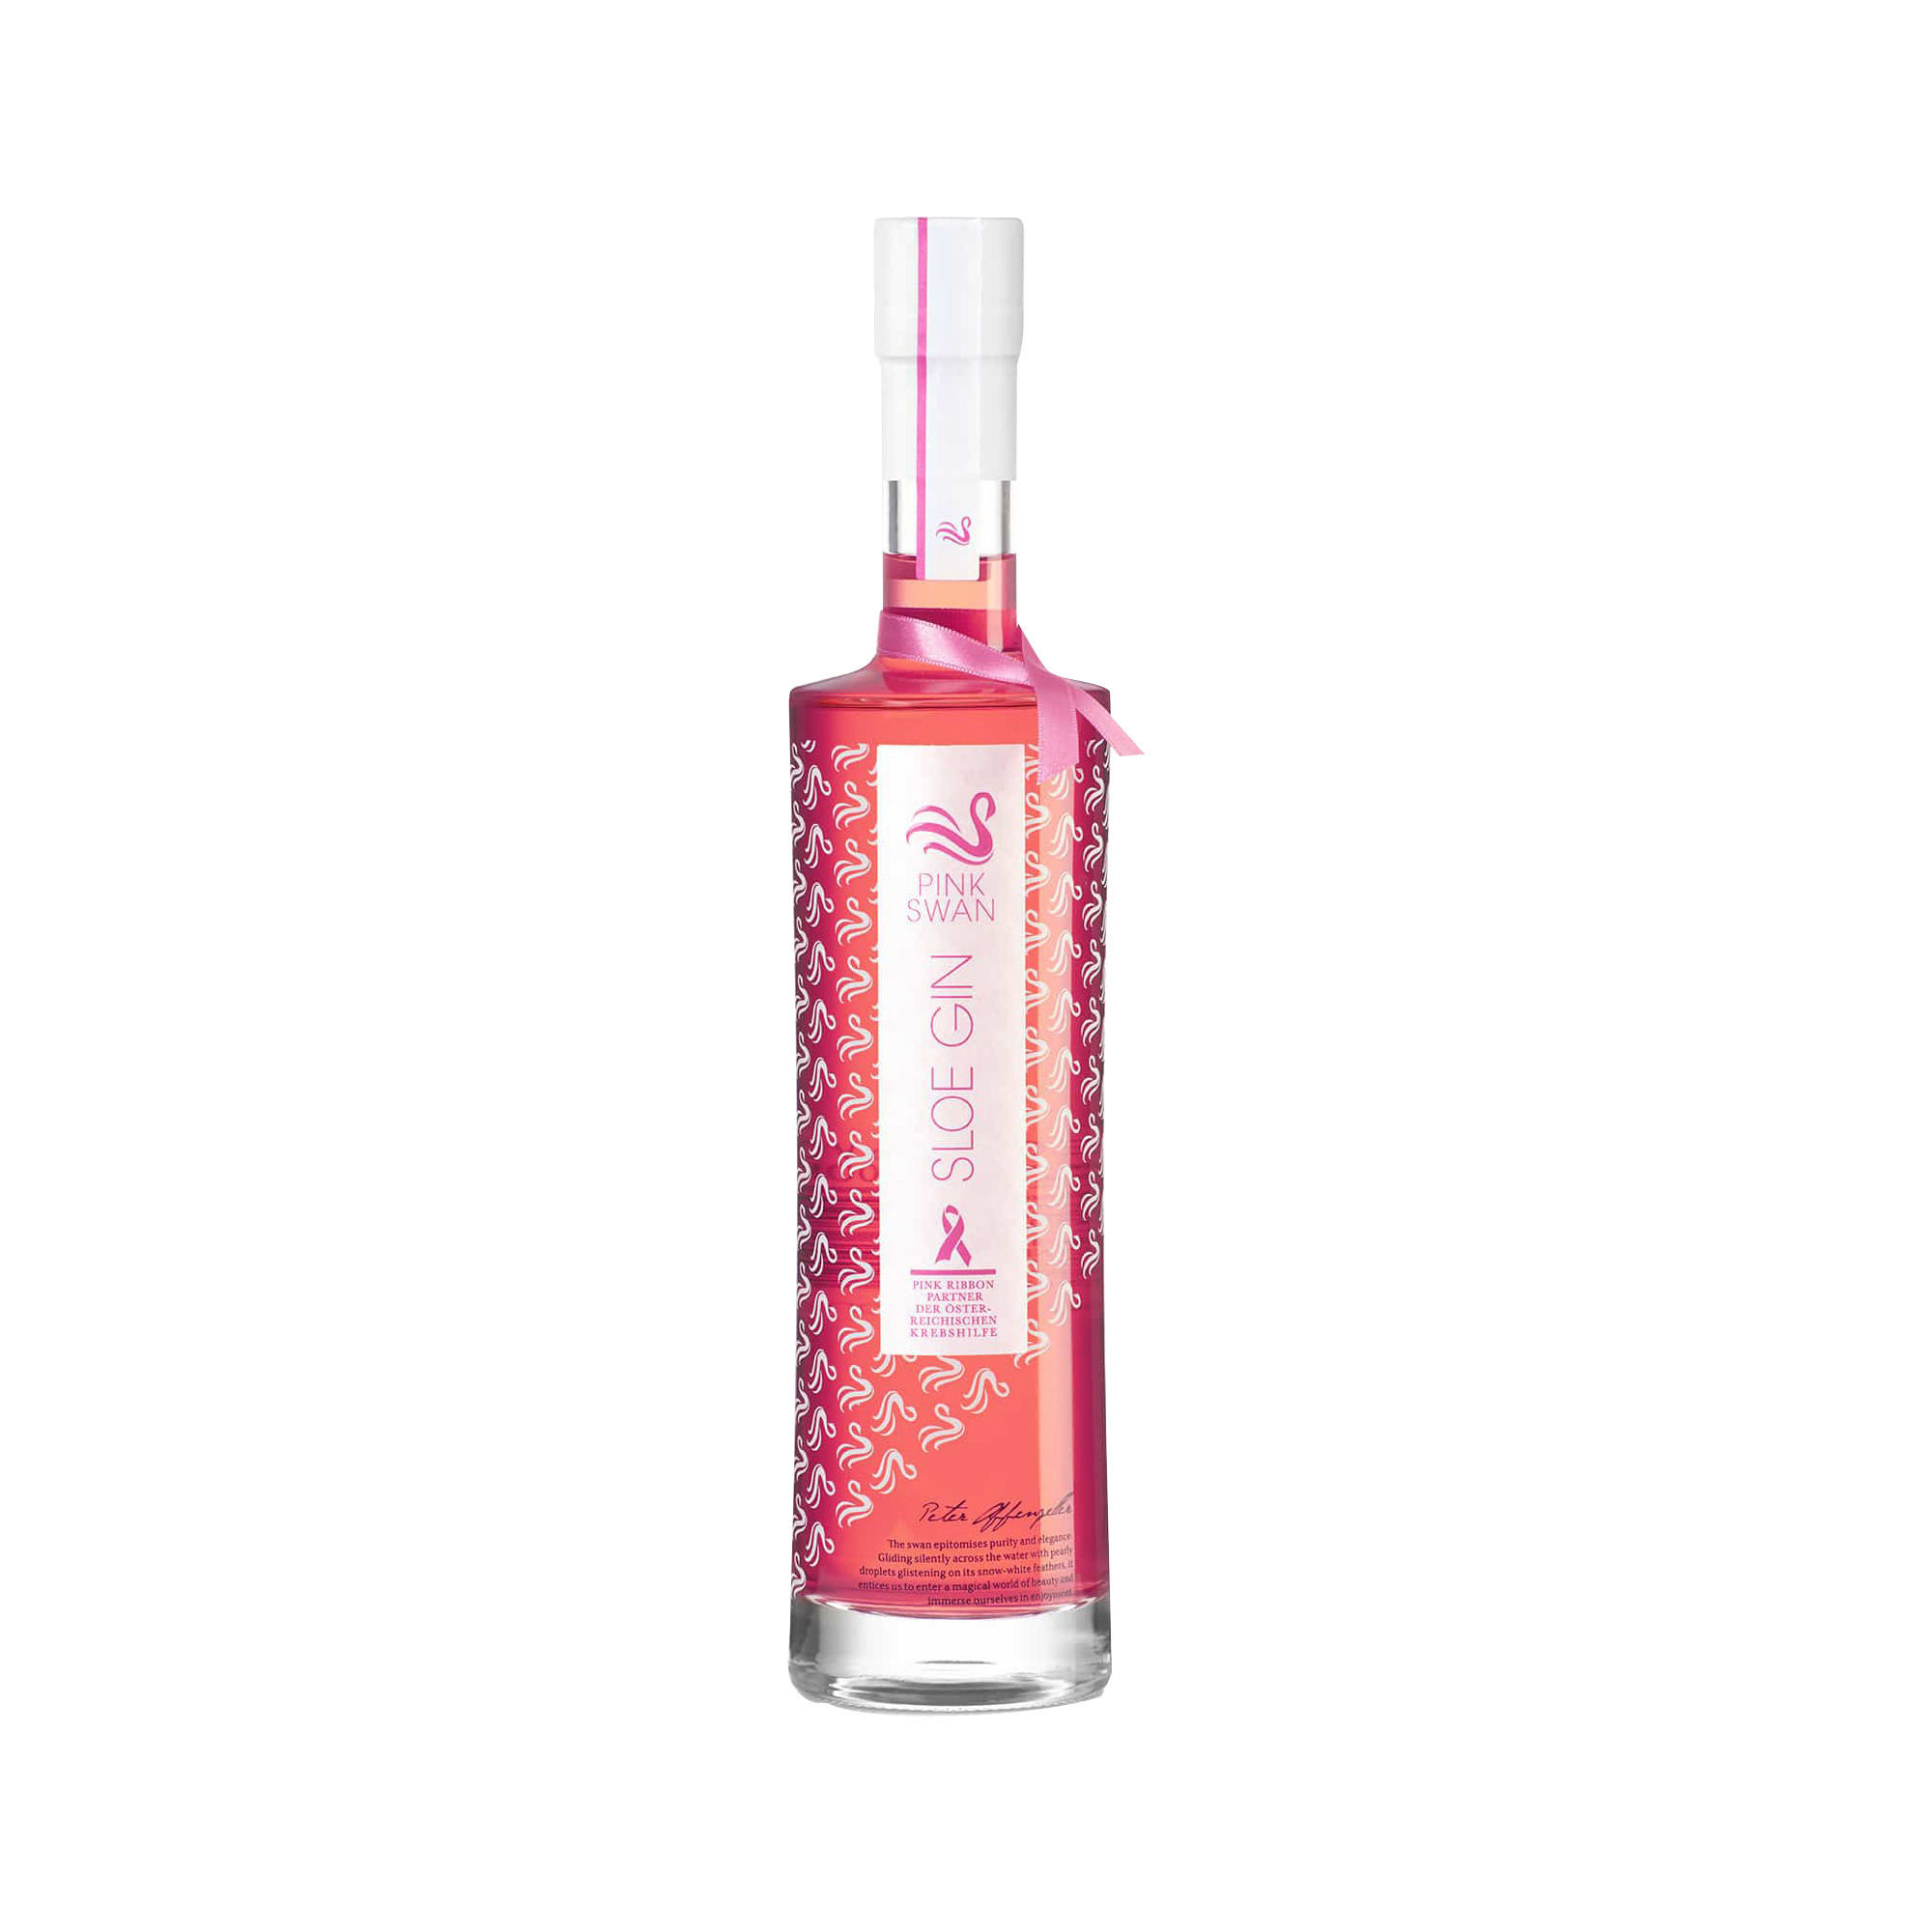 Affenzeller Pink Swan Sloe Gin 0,7l